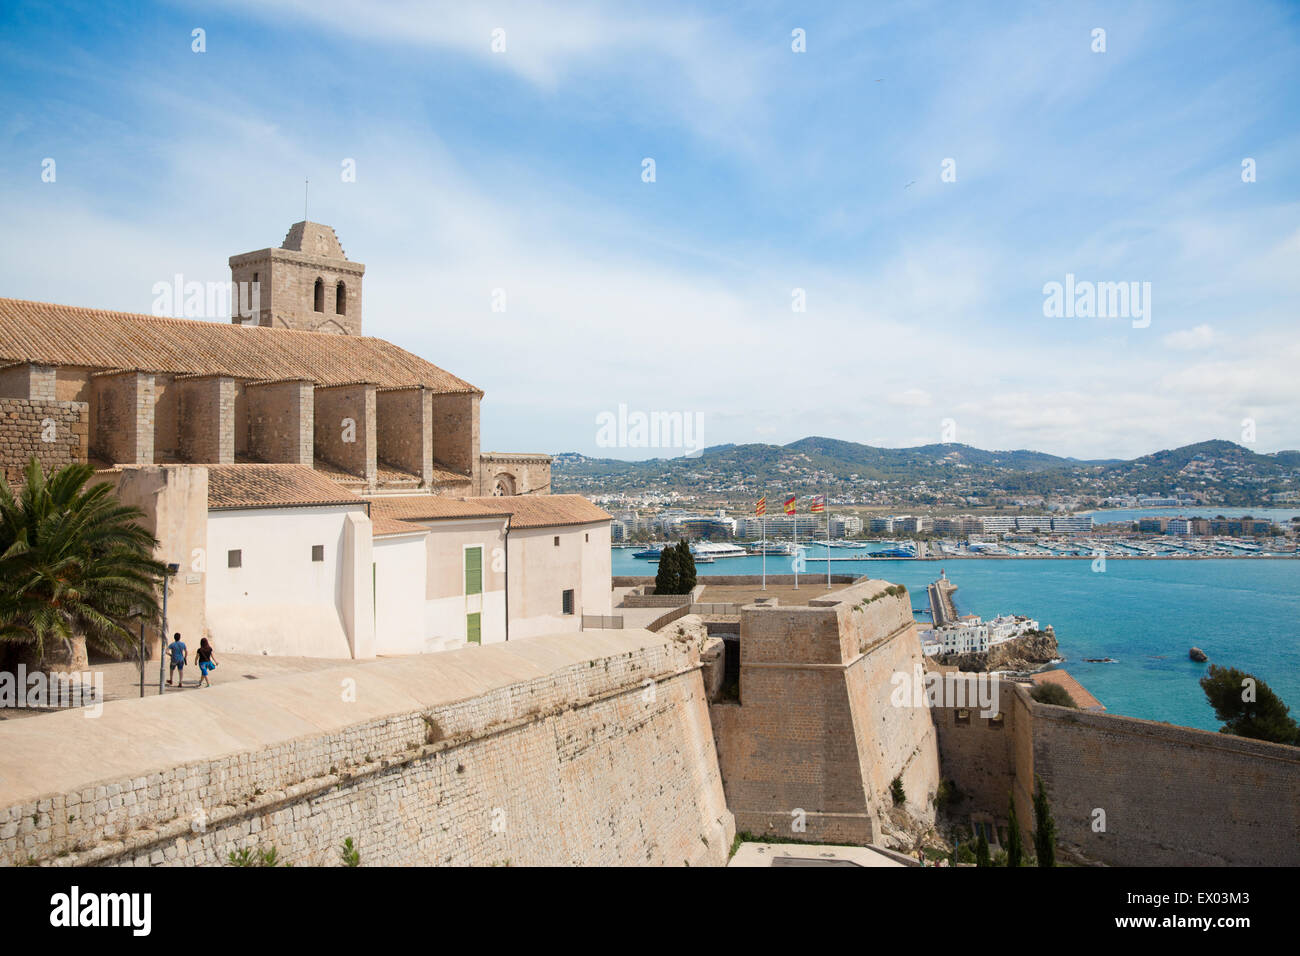 View of city walls and harbor, Ibiza, Spain Stock Photo